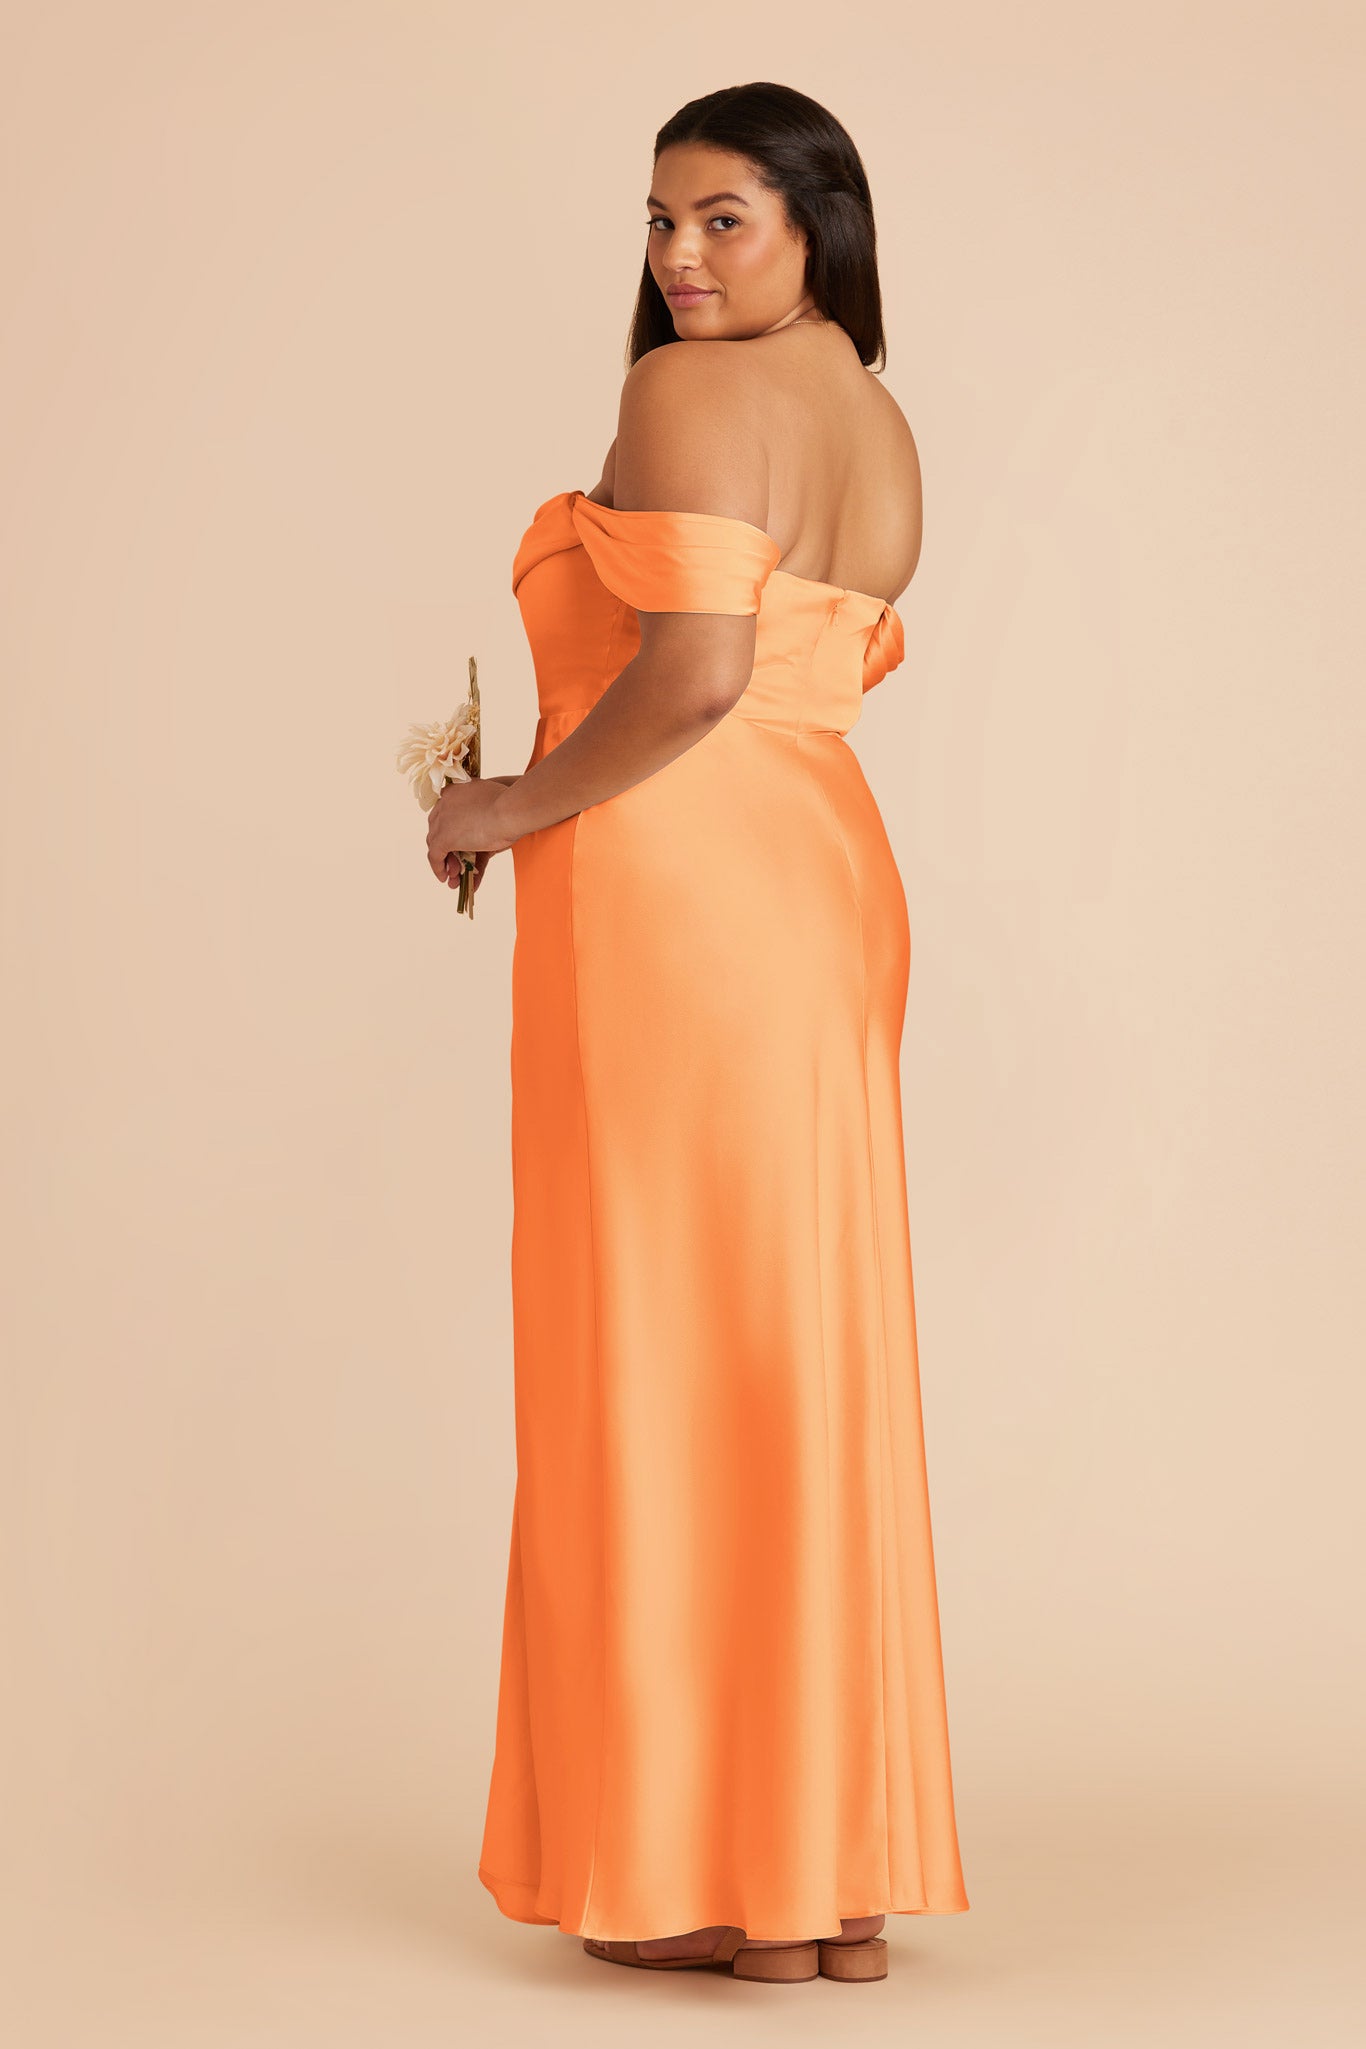 Apricot Mia Matte Satin Dress by Birdy Grey